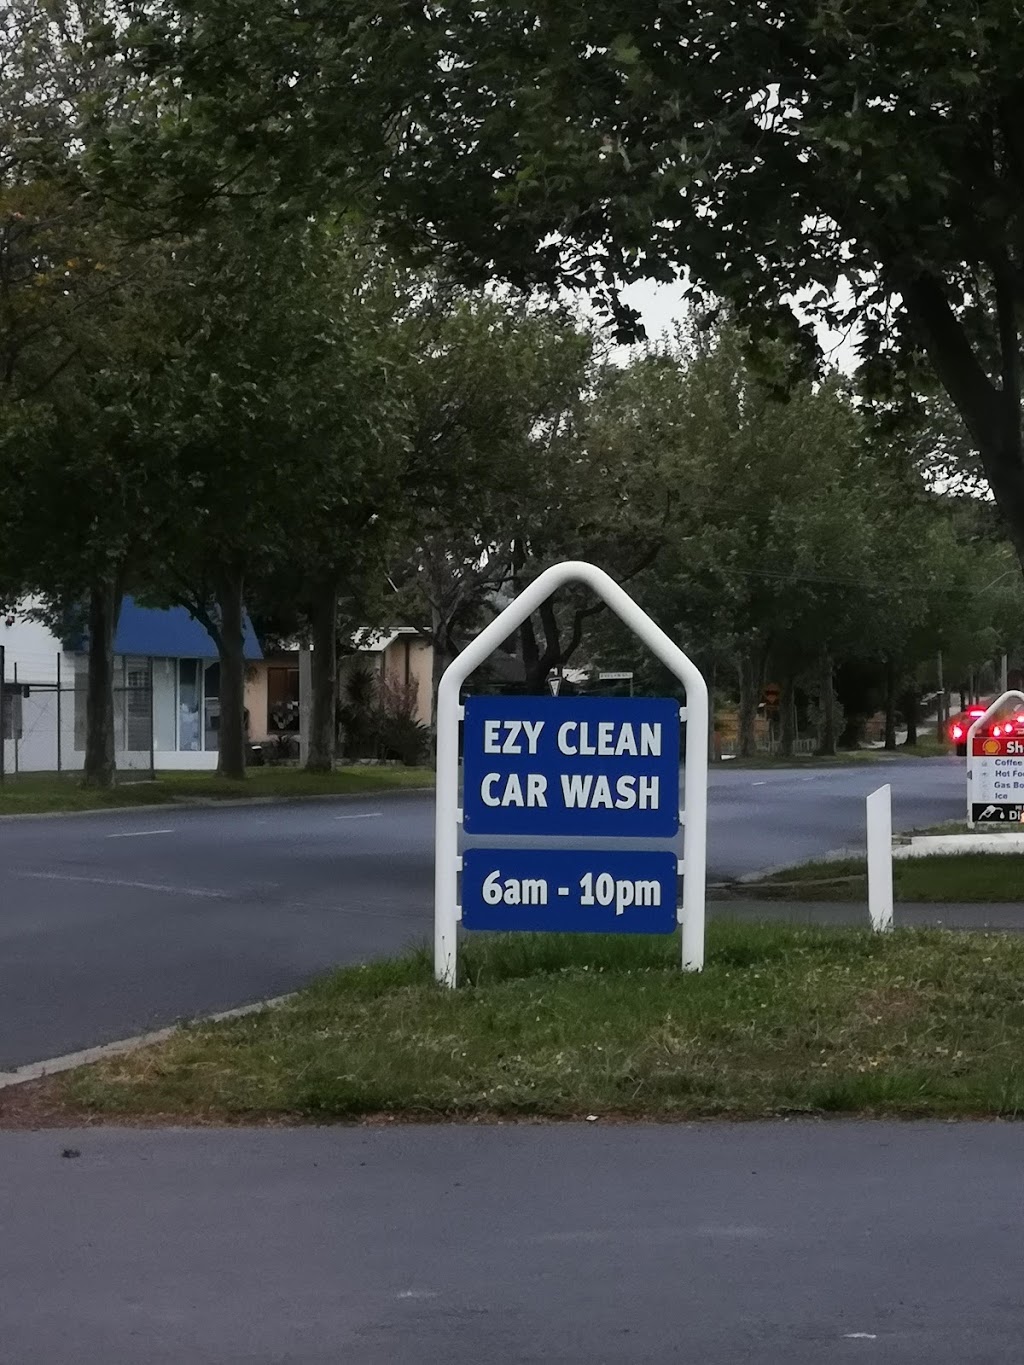 Ezy Clean Carwash | car wash | 121-81, C466, Moe VIC 3825, Australia